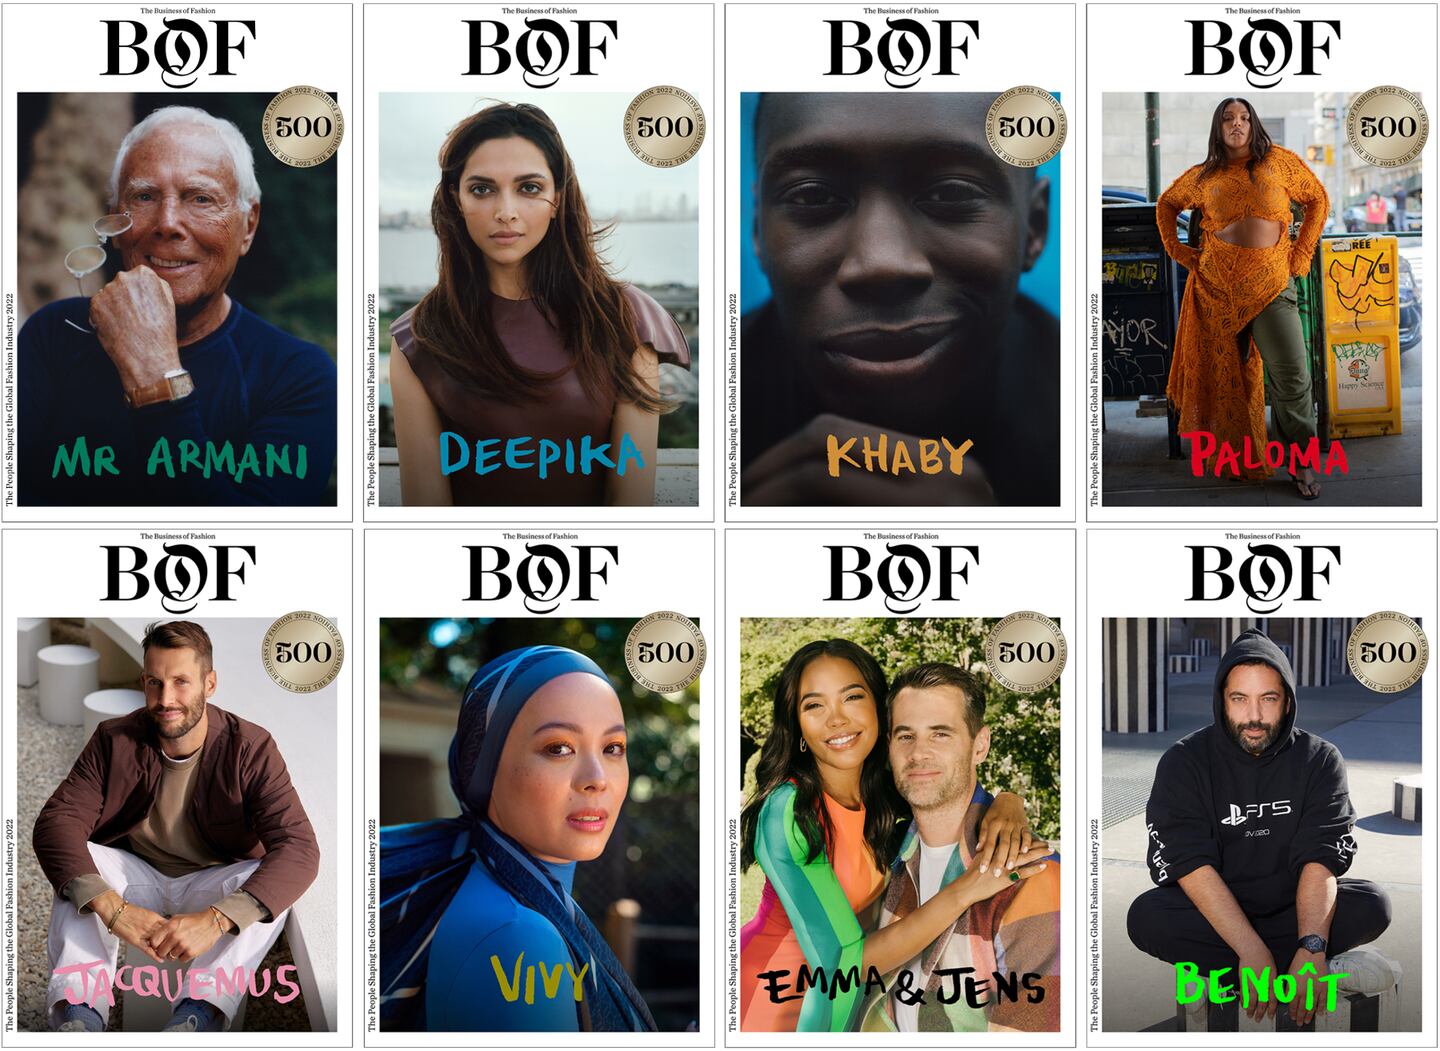 Giorgio Armani, Deepika Padukone, Simon Porte Jacquemus, Paloma Elsesser, Benoit Pagotto, Jens & Emma Grede, Vivy Yusof and Khaby Lame are the subjects of BoF’s global BoF 500 Cover Stories.